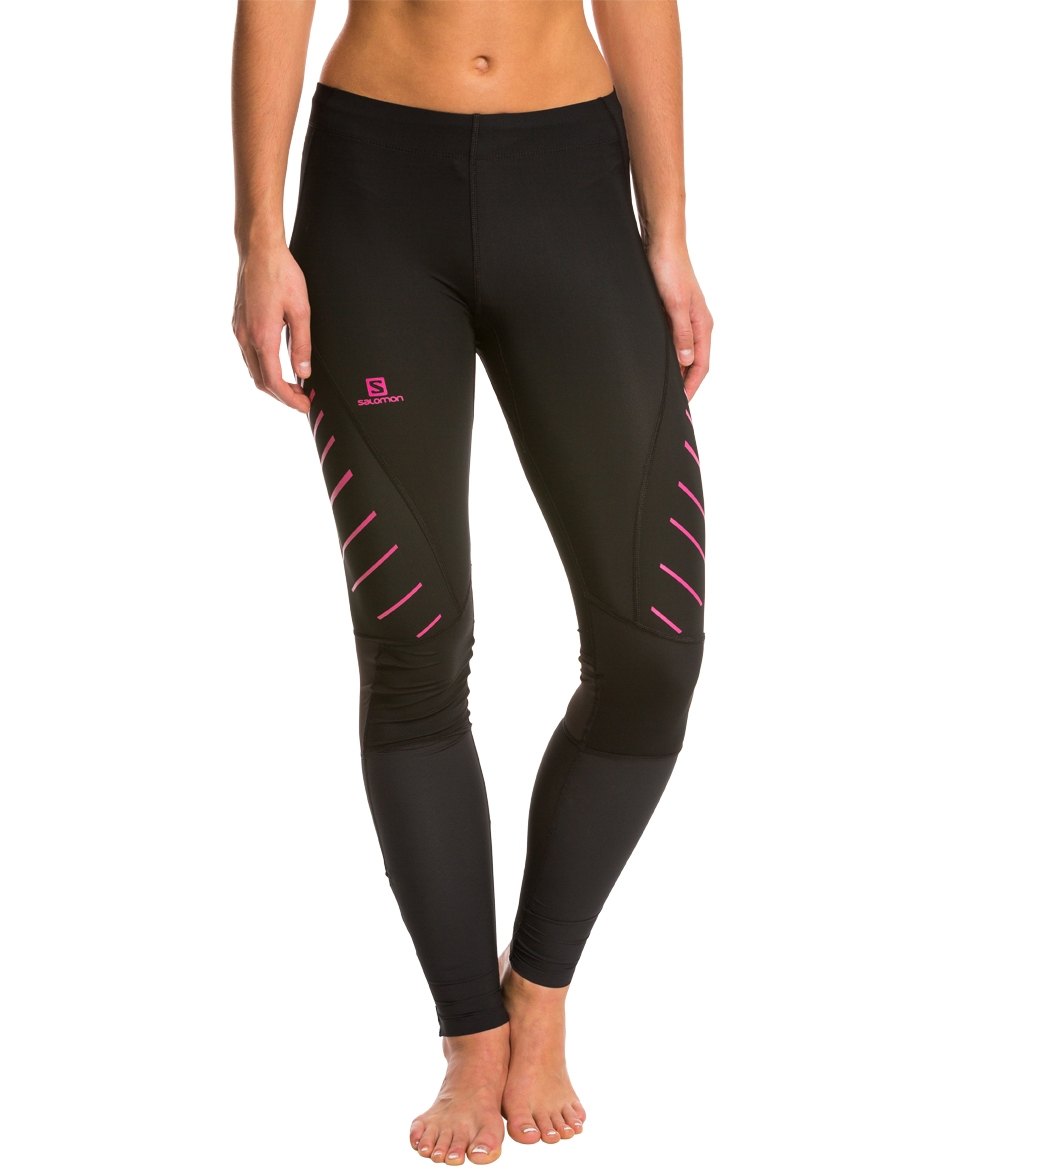 Salomon Women's Endurance Tight - Black/Hot Pink Xl - Swimoutlet.com